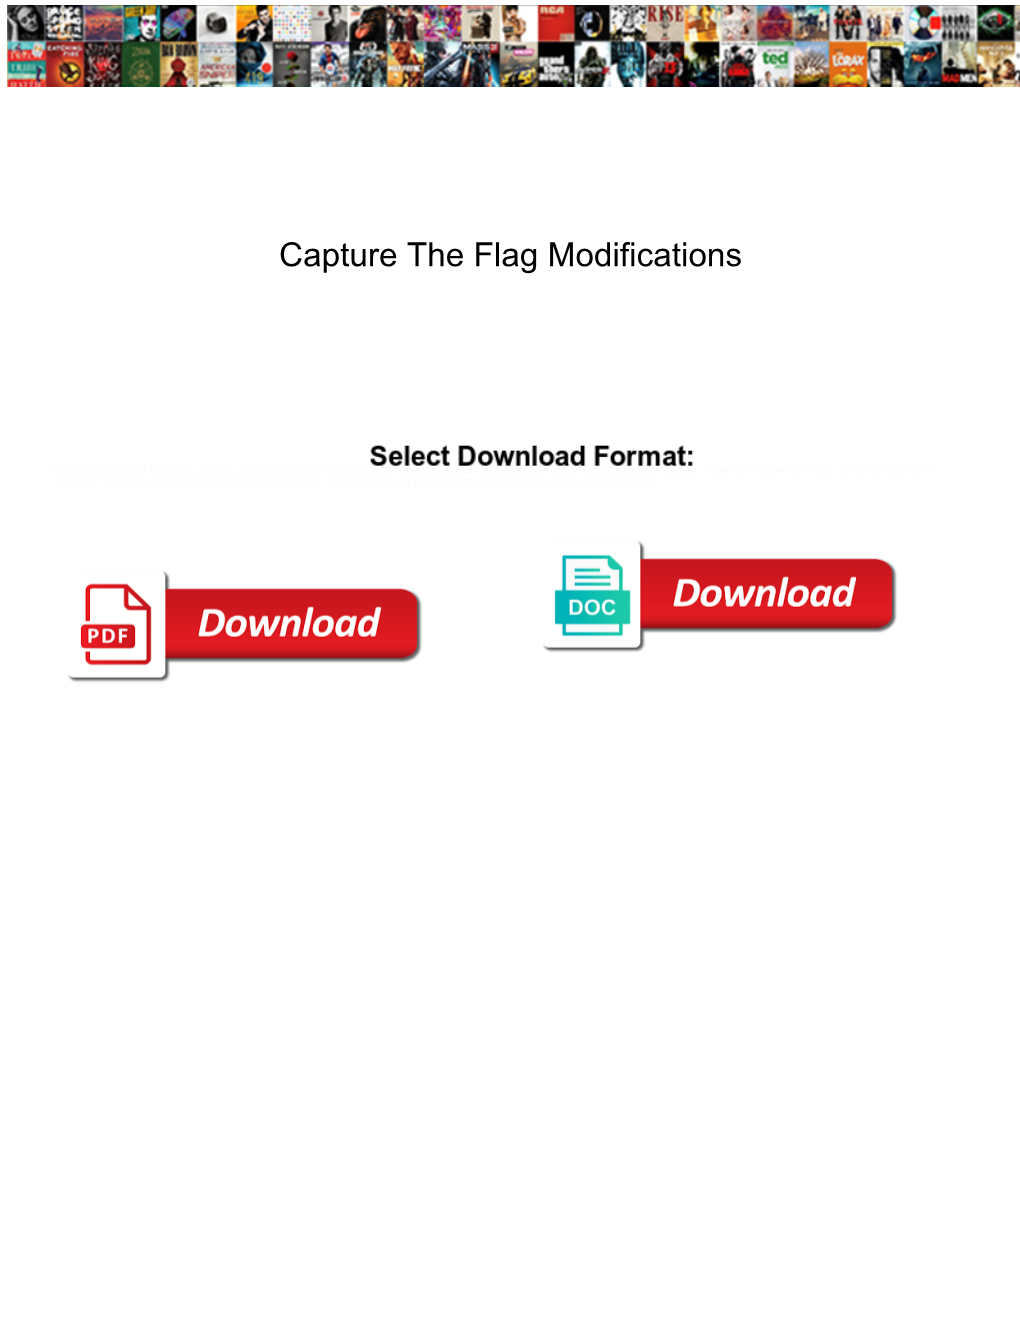 Capture the Flag Modifications